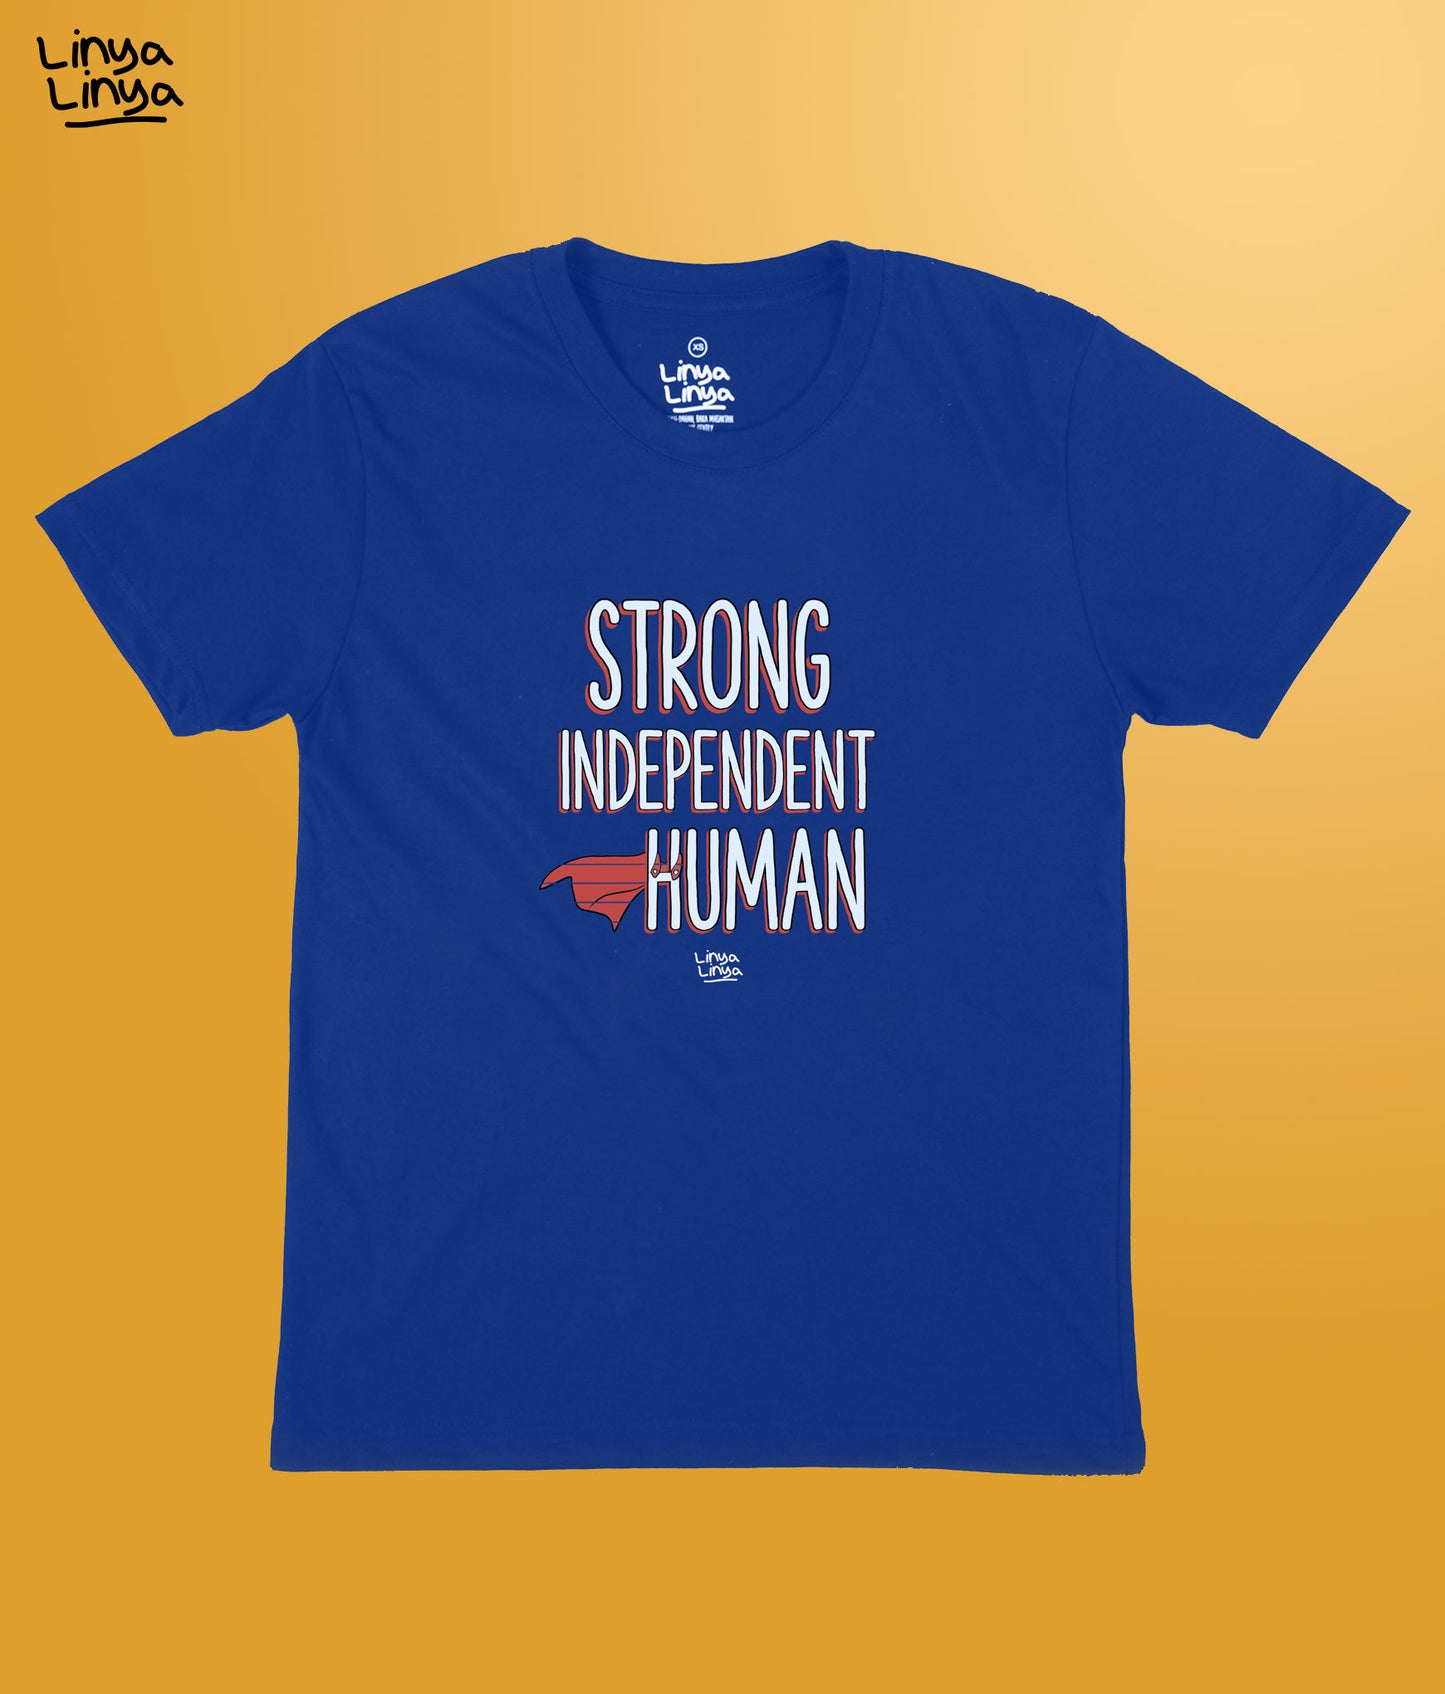 Strong Independent Human (A. Blue)